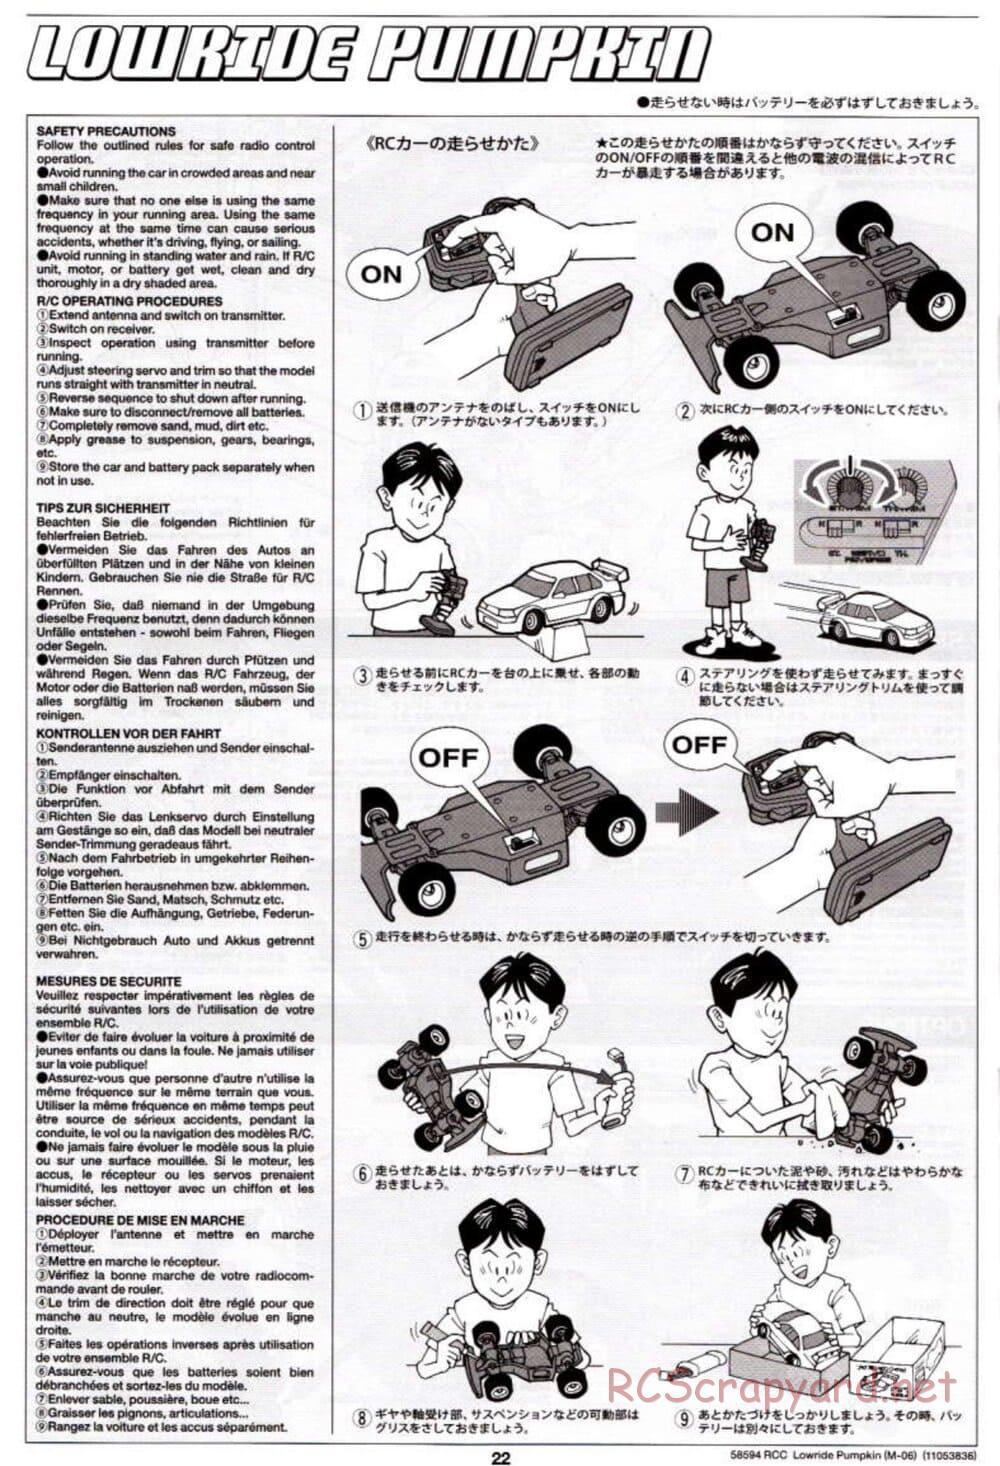 Tamiya - Lowride Pumpkin - M-06 Chassis - Manual - Page 22